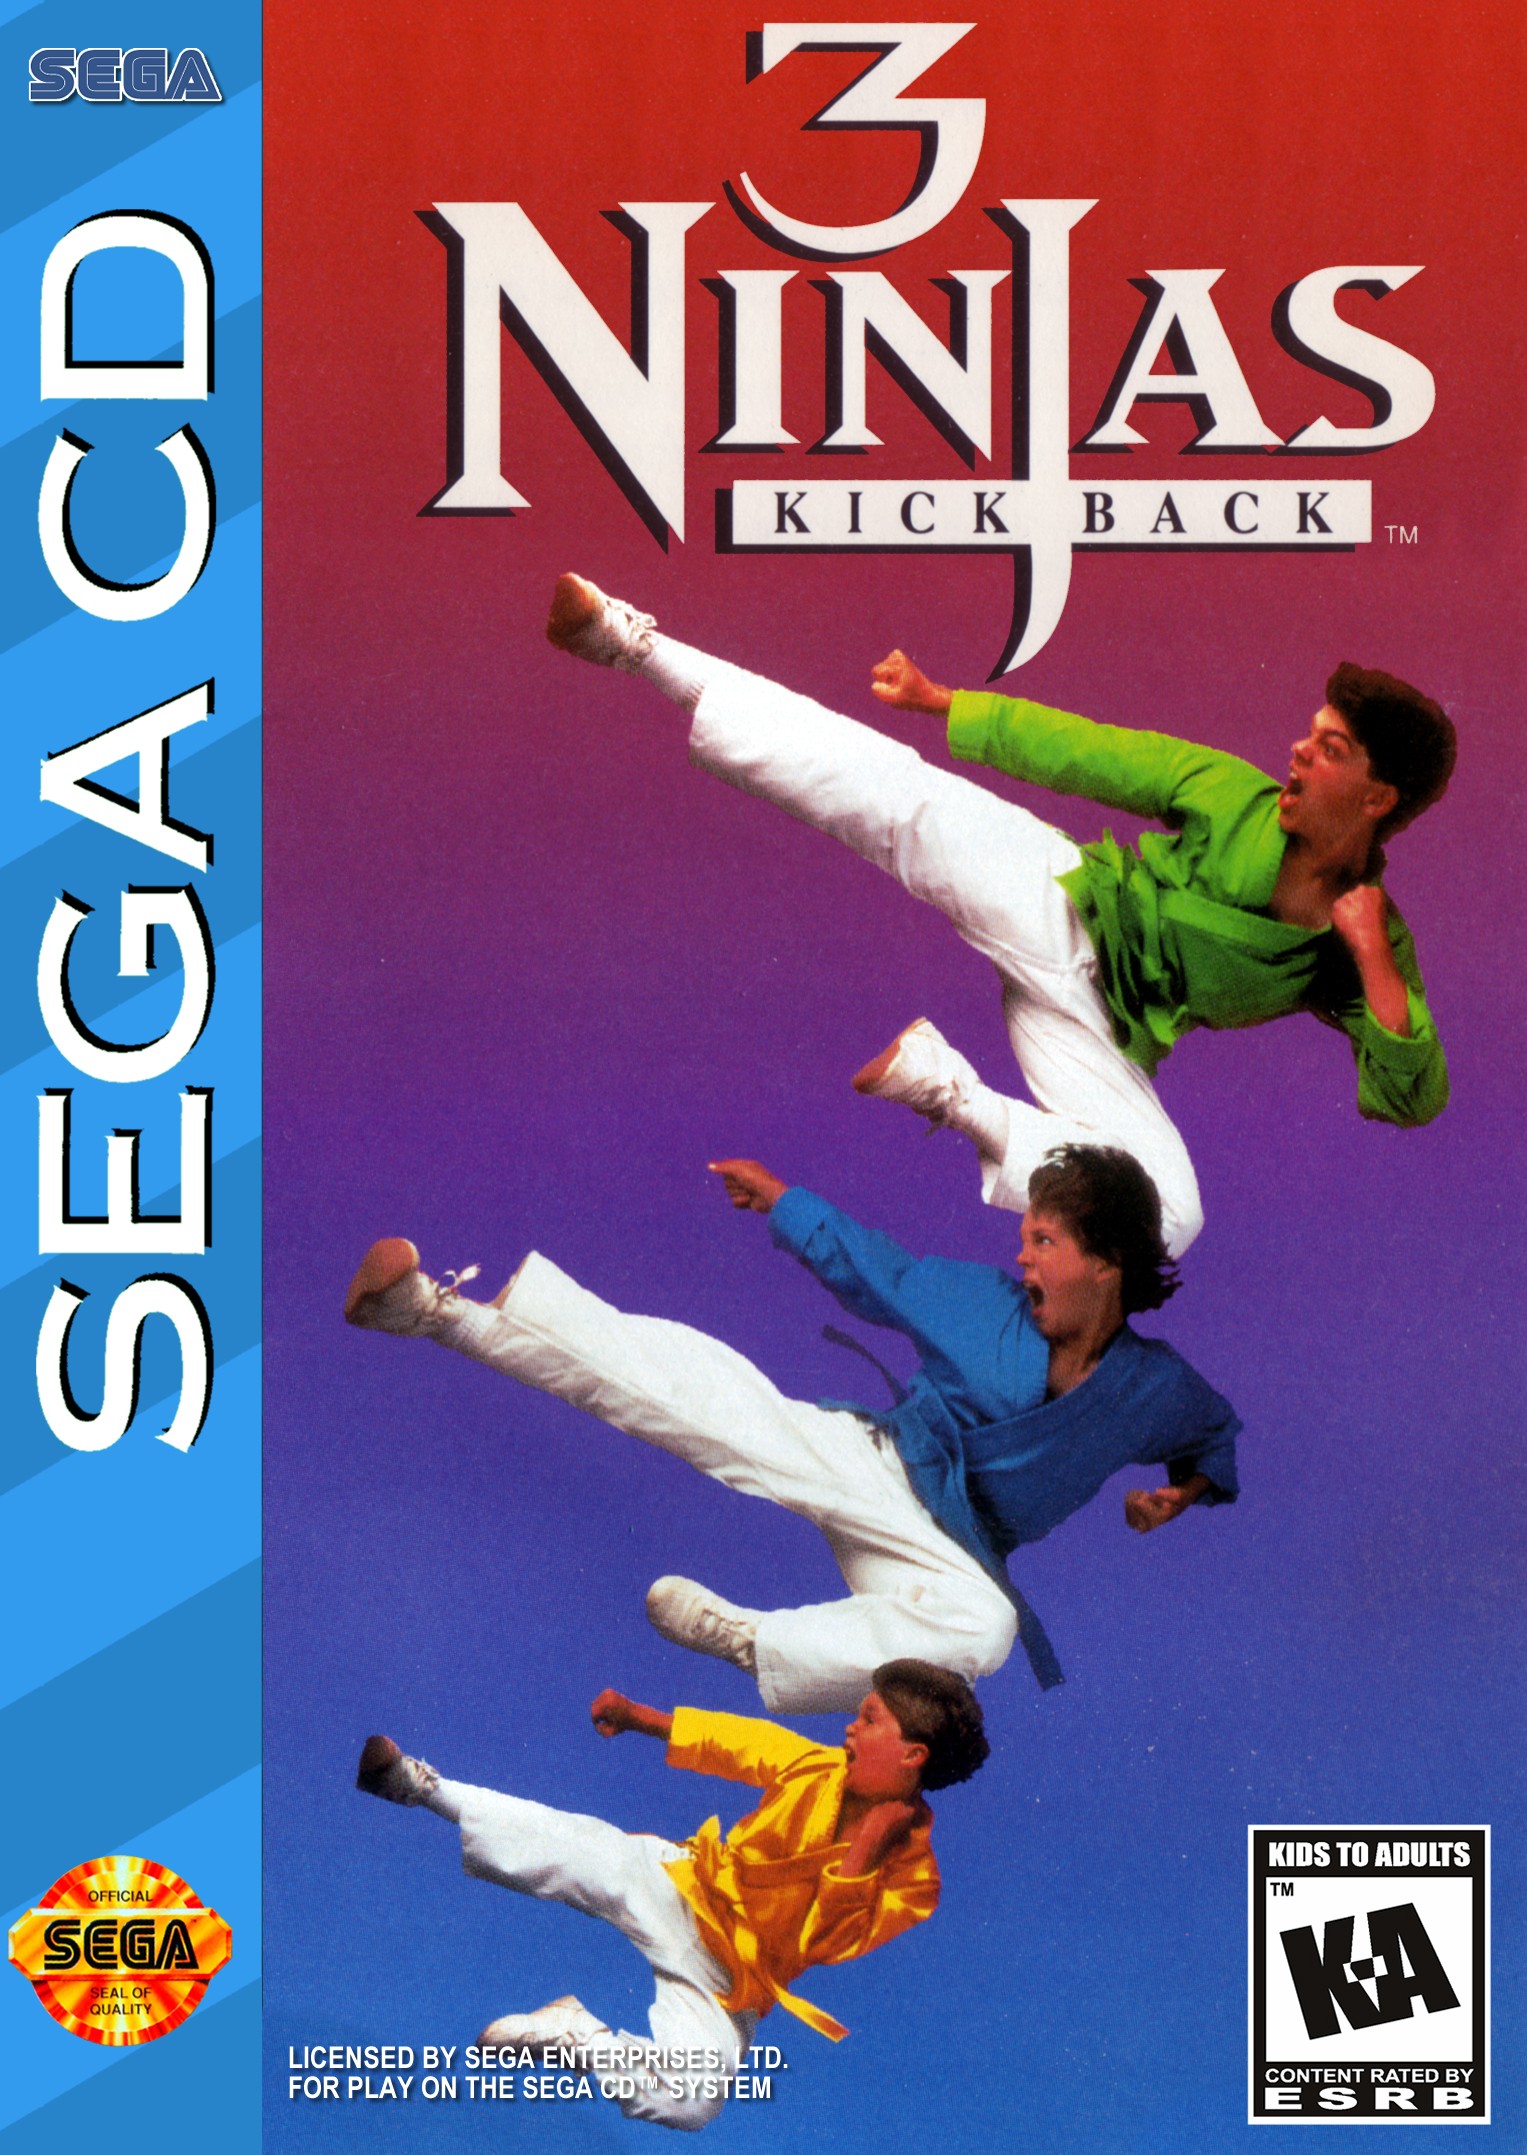 '3 Ninjas Kick Back'